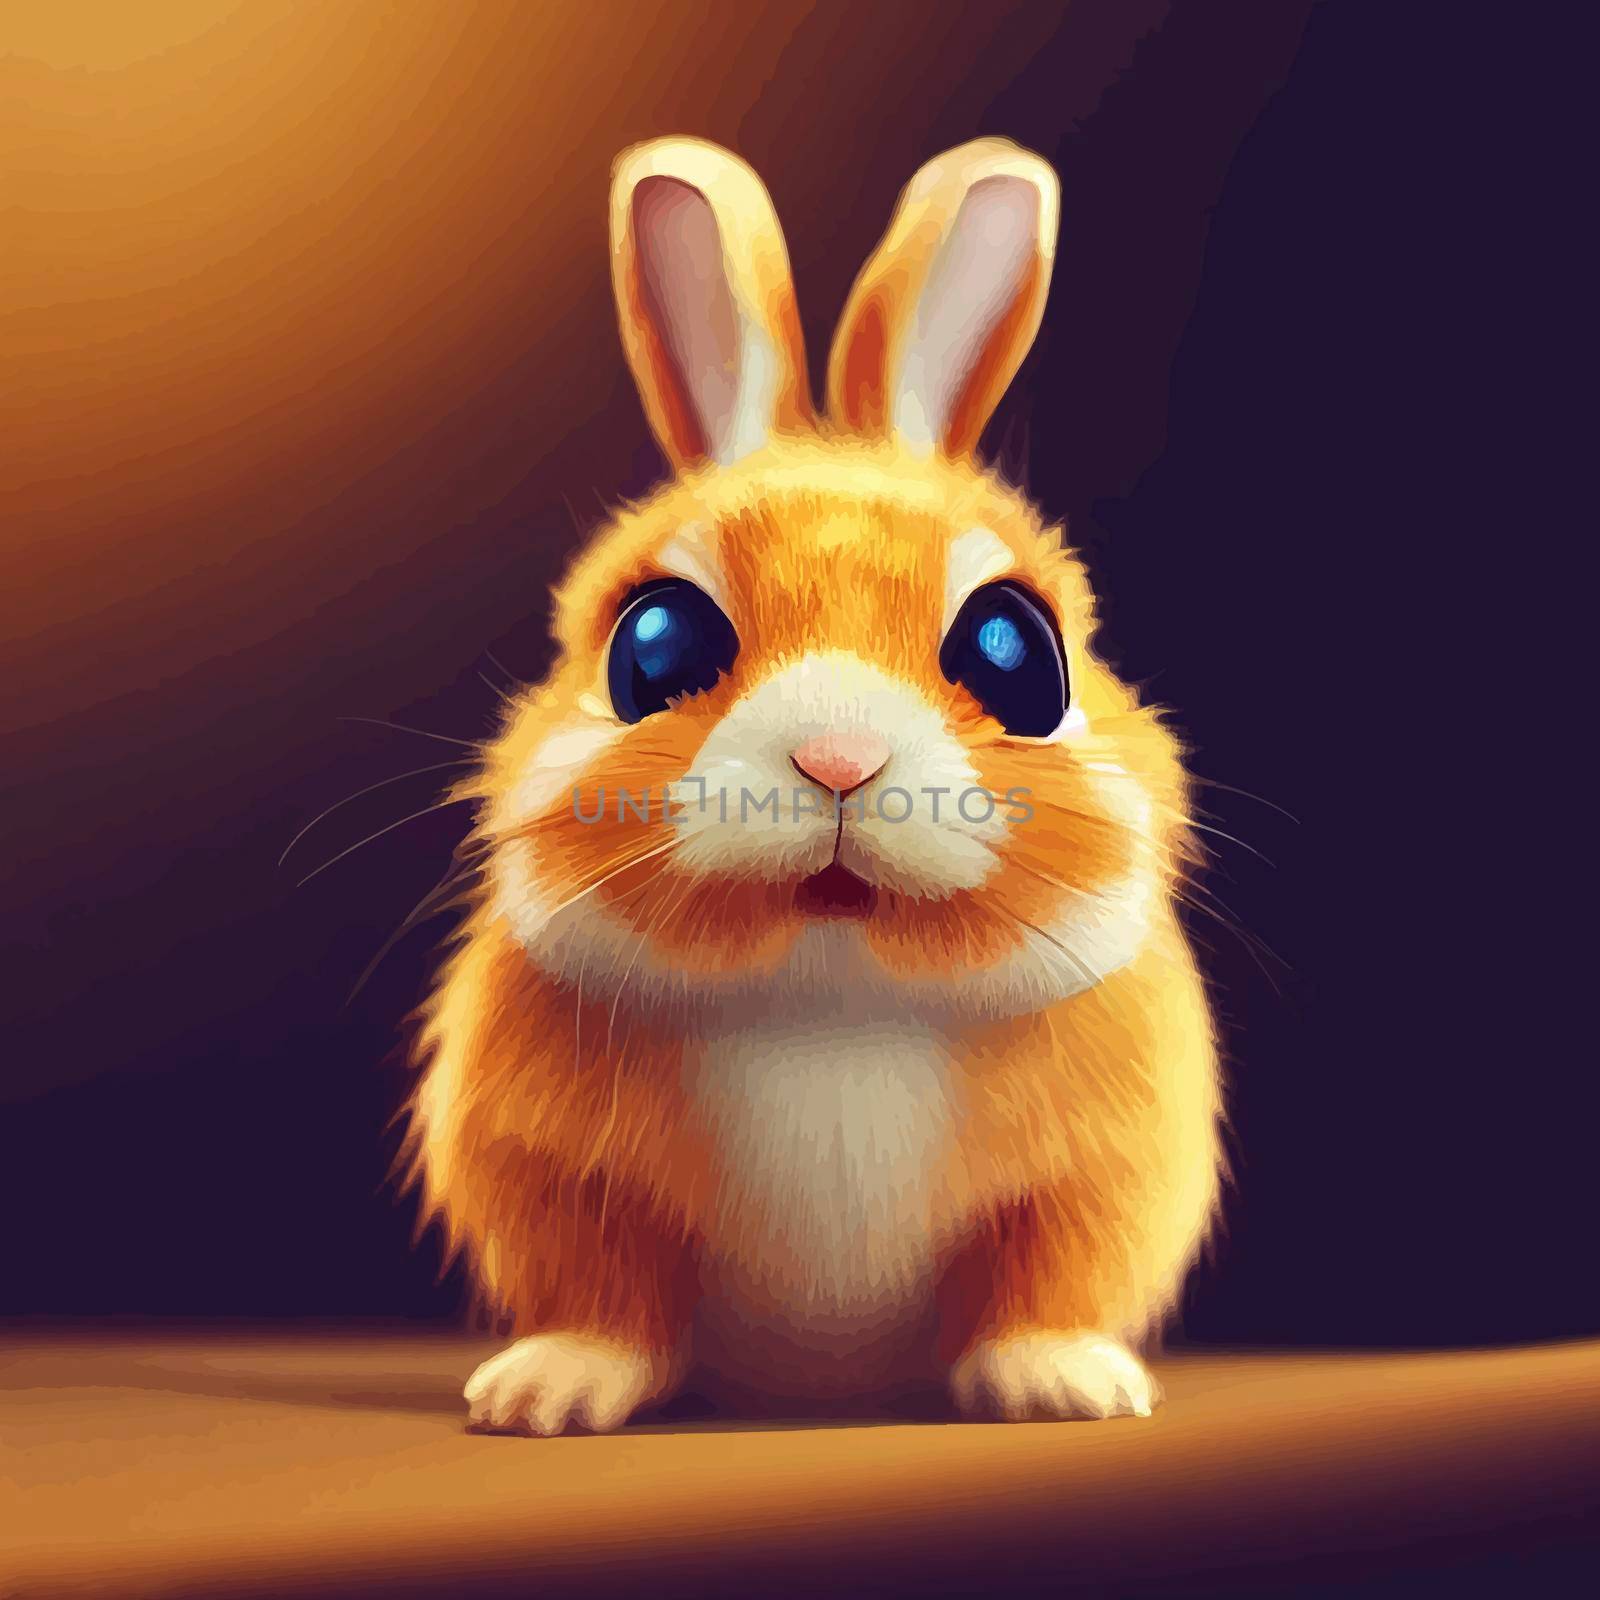 animated illustration of a cute rabbit, animated baby rabbit portrait. cute bunny. by JpRamos